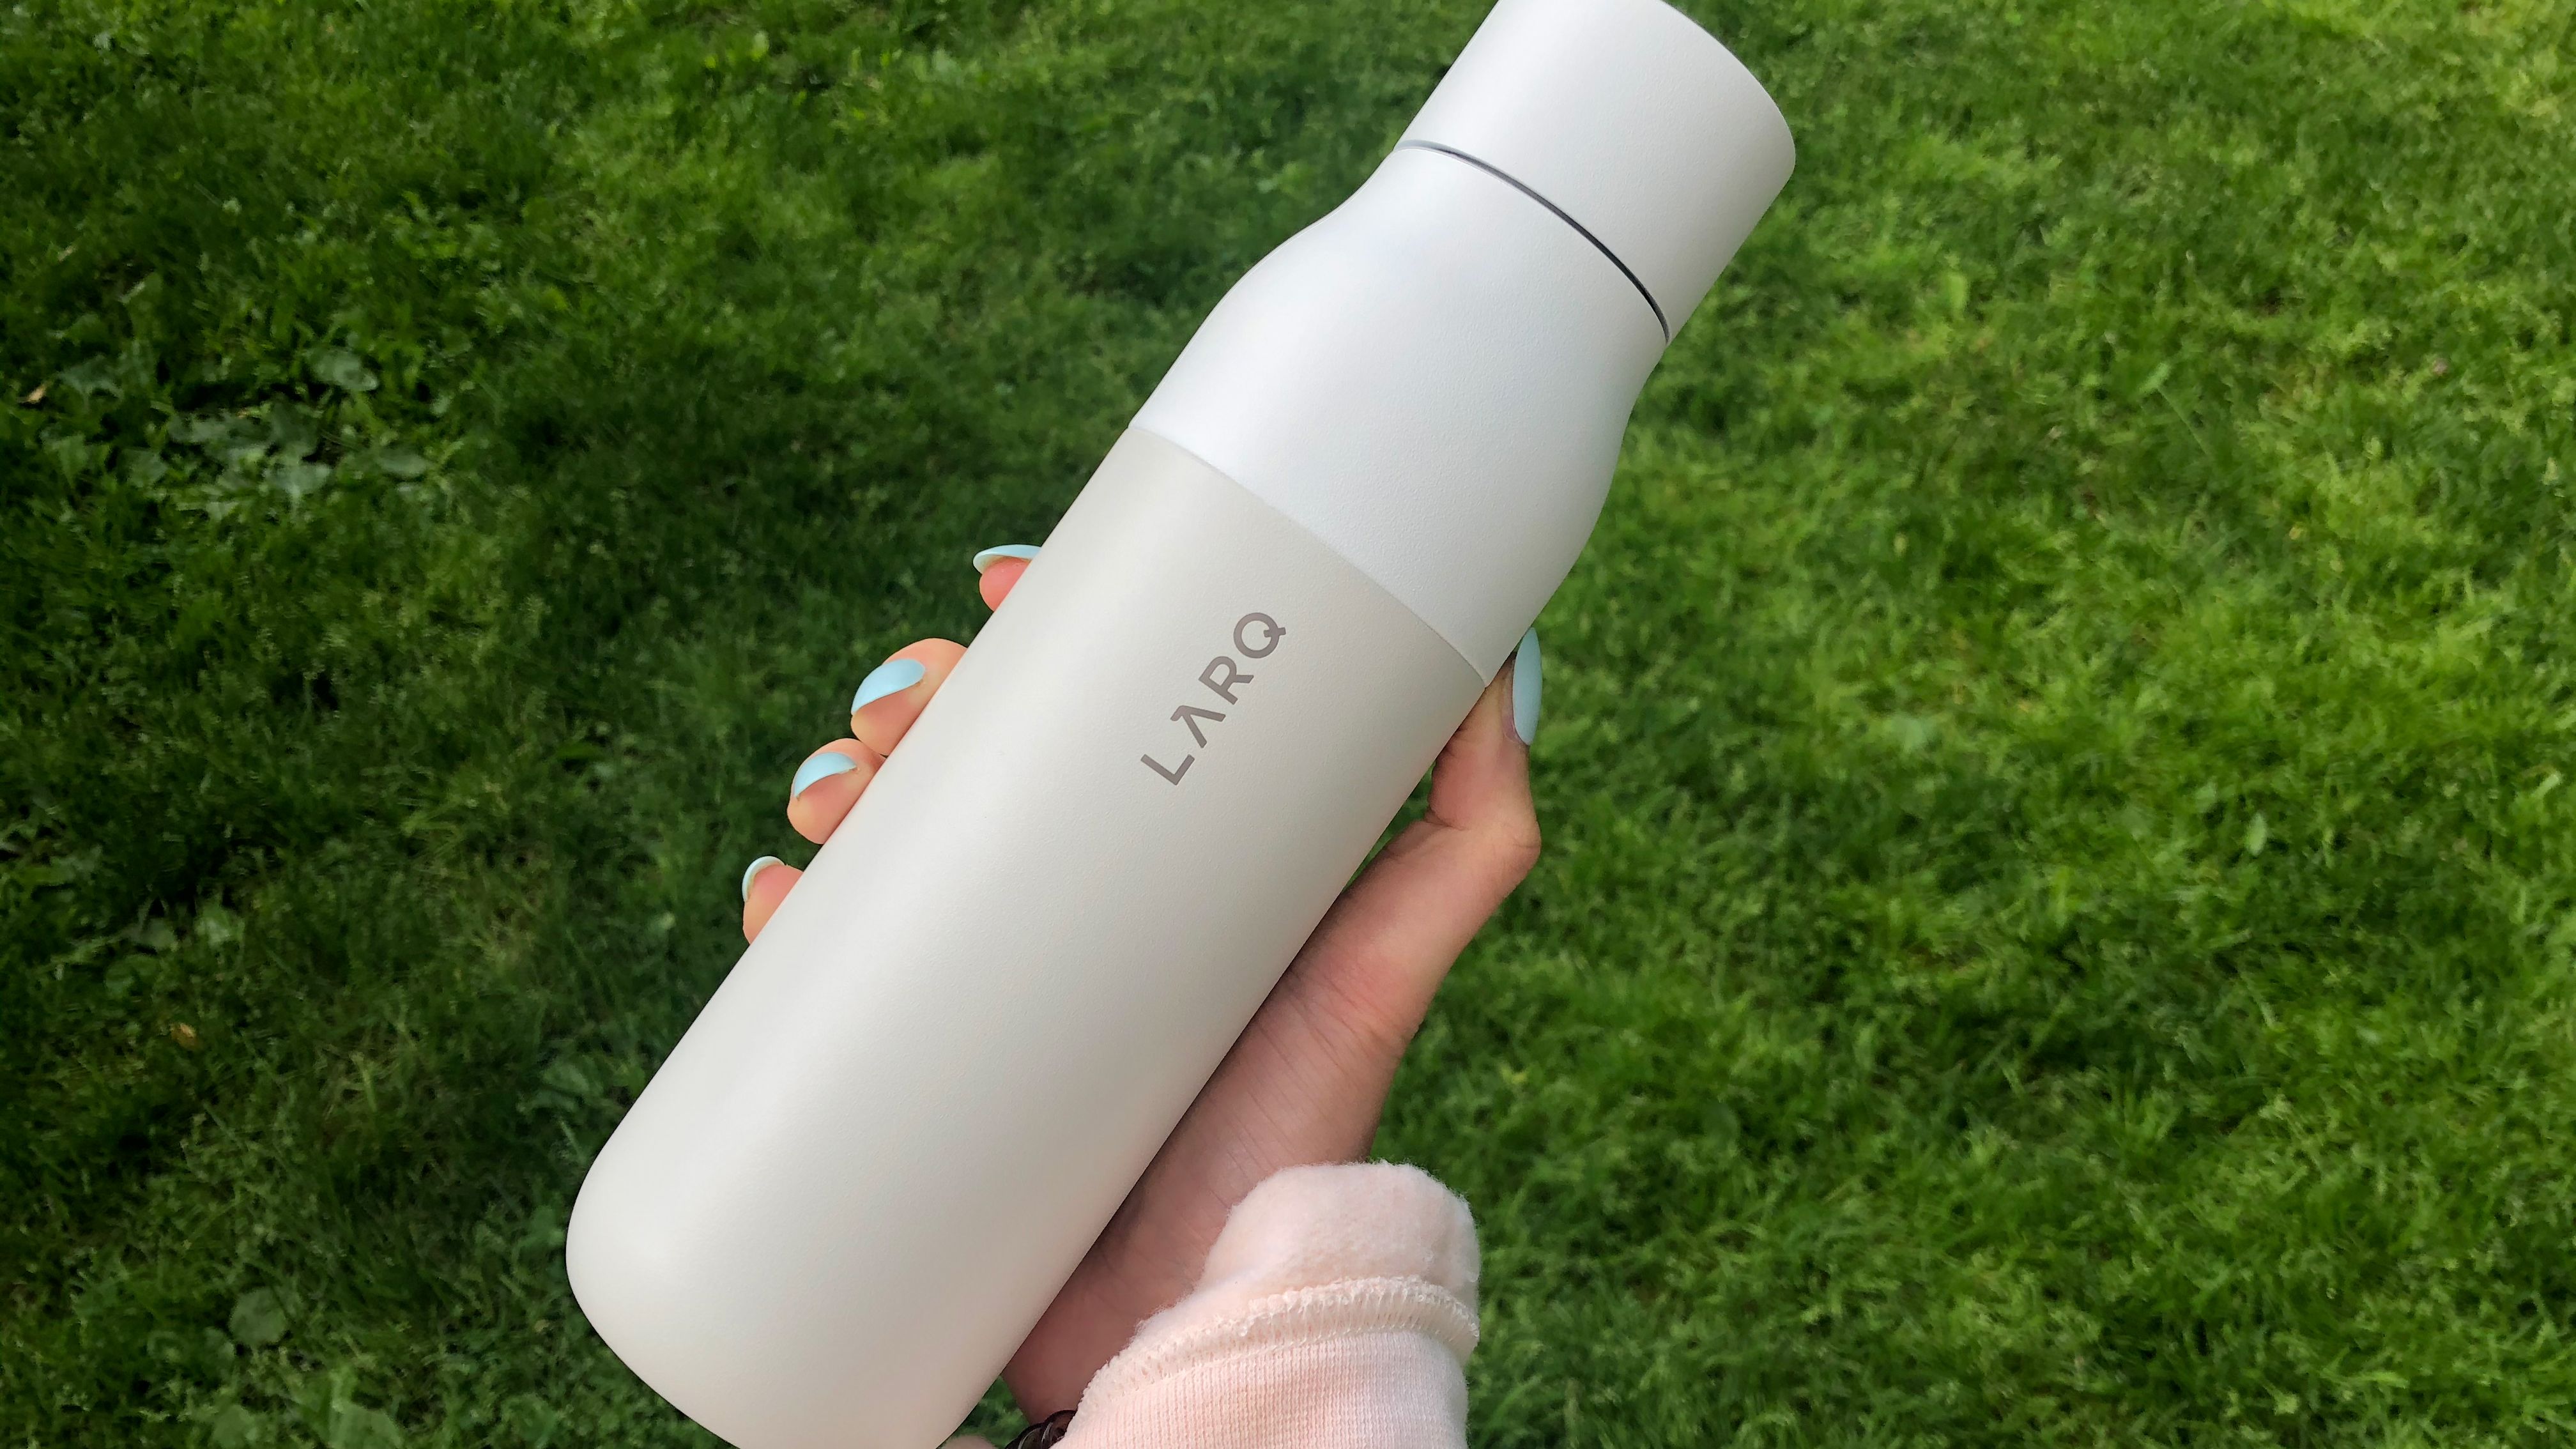 Product review: LARQ's World's First Self-cleaning Water Bottle -  Kristelvdakker